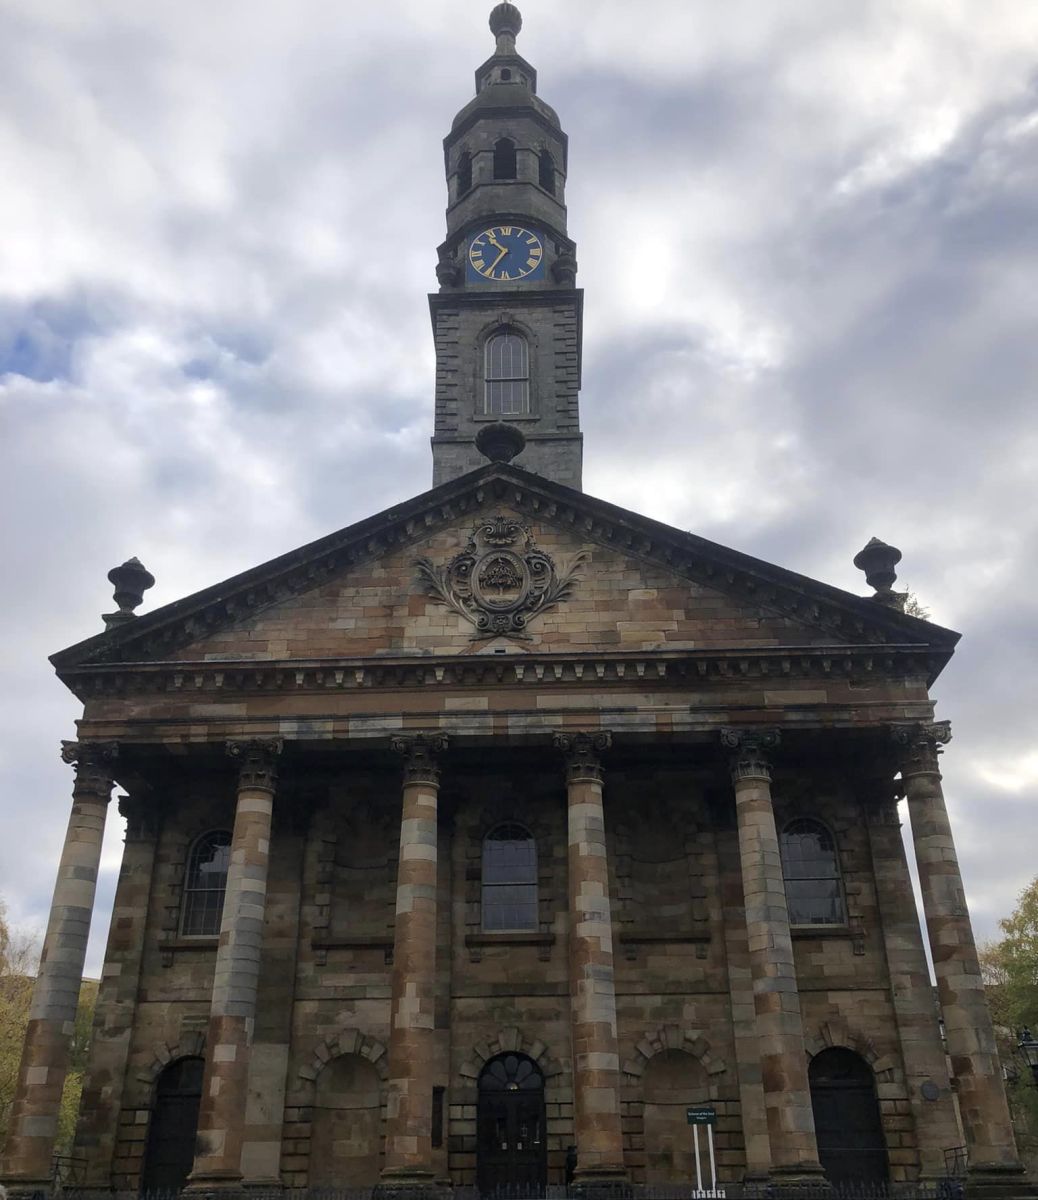 Saint Andrew's Square in Glasgow city centre